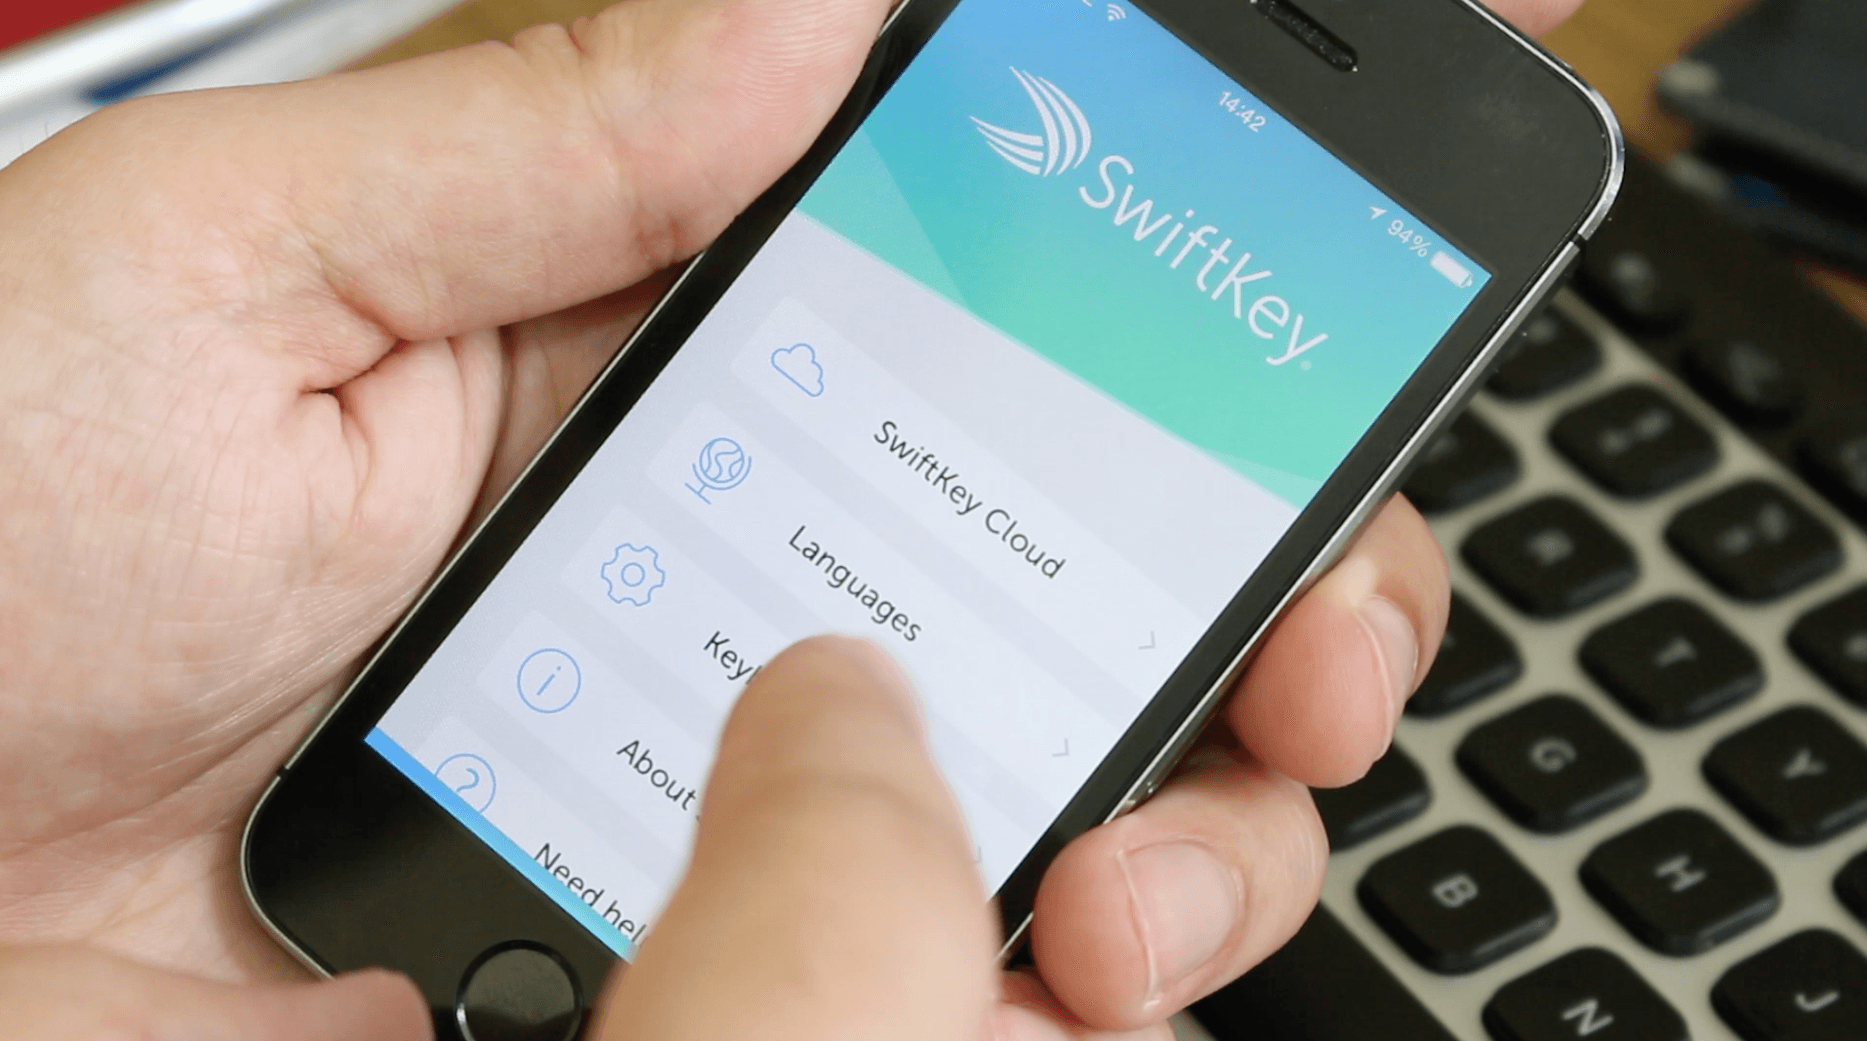 swiftkey app for iphone